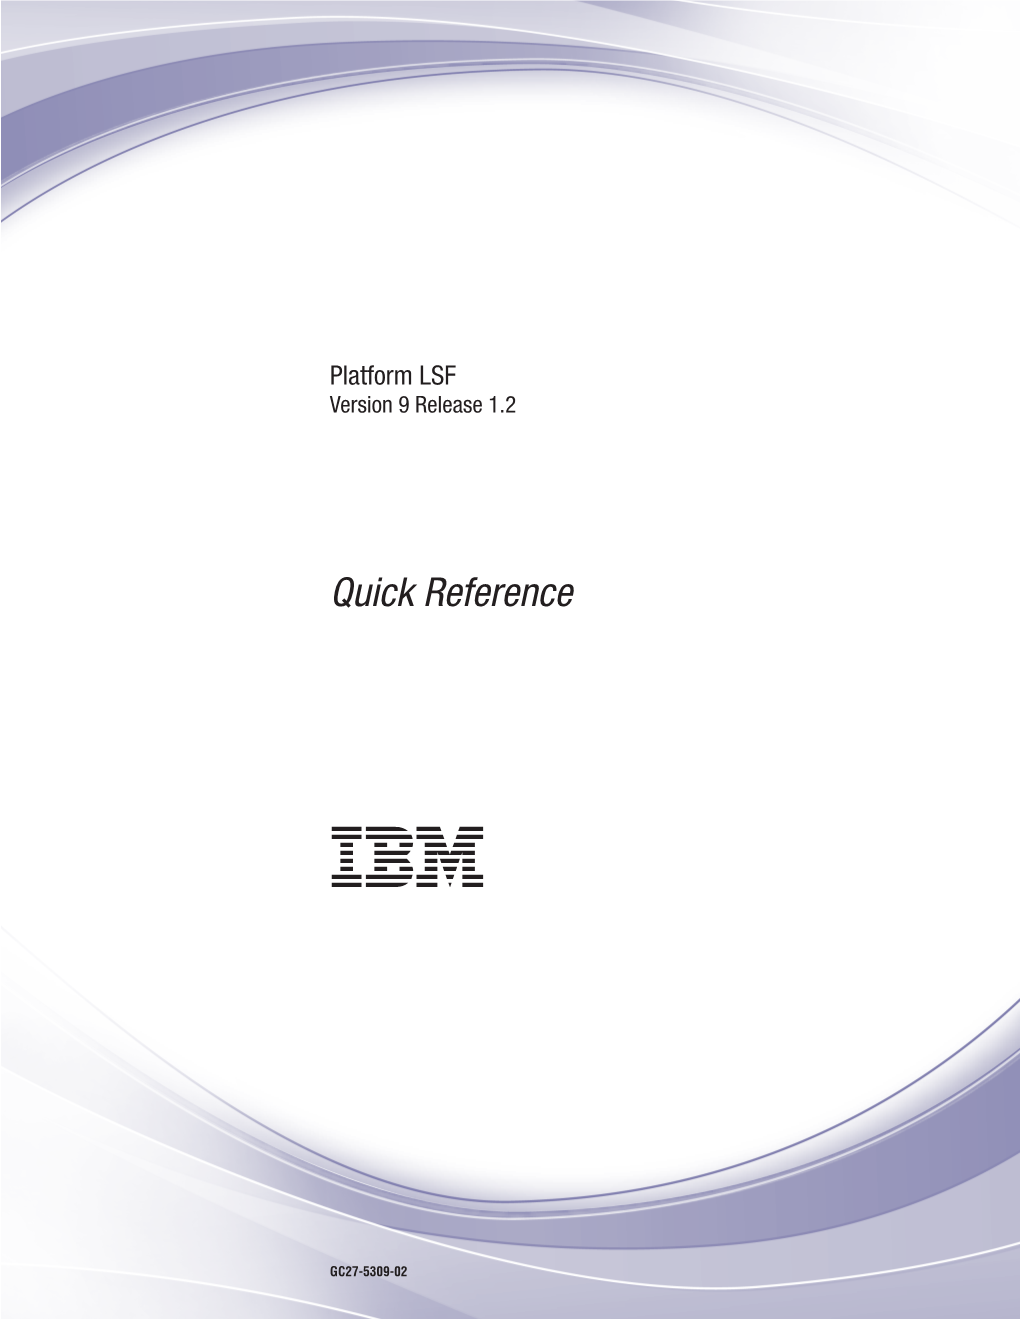 Platform LSF Quick Reference IBM Platform LSF 9.1.2 Quick Reference